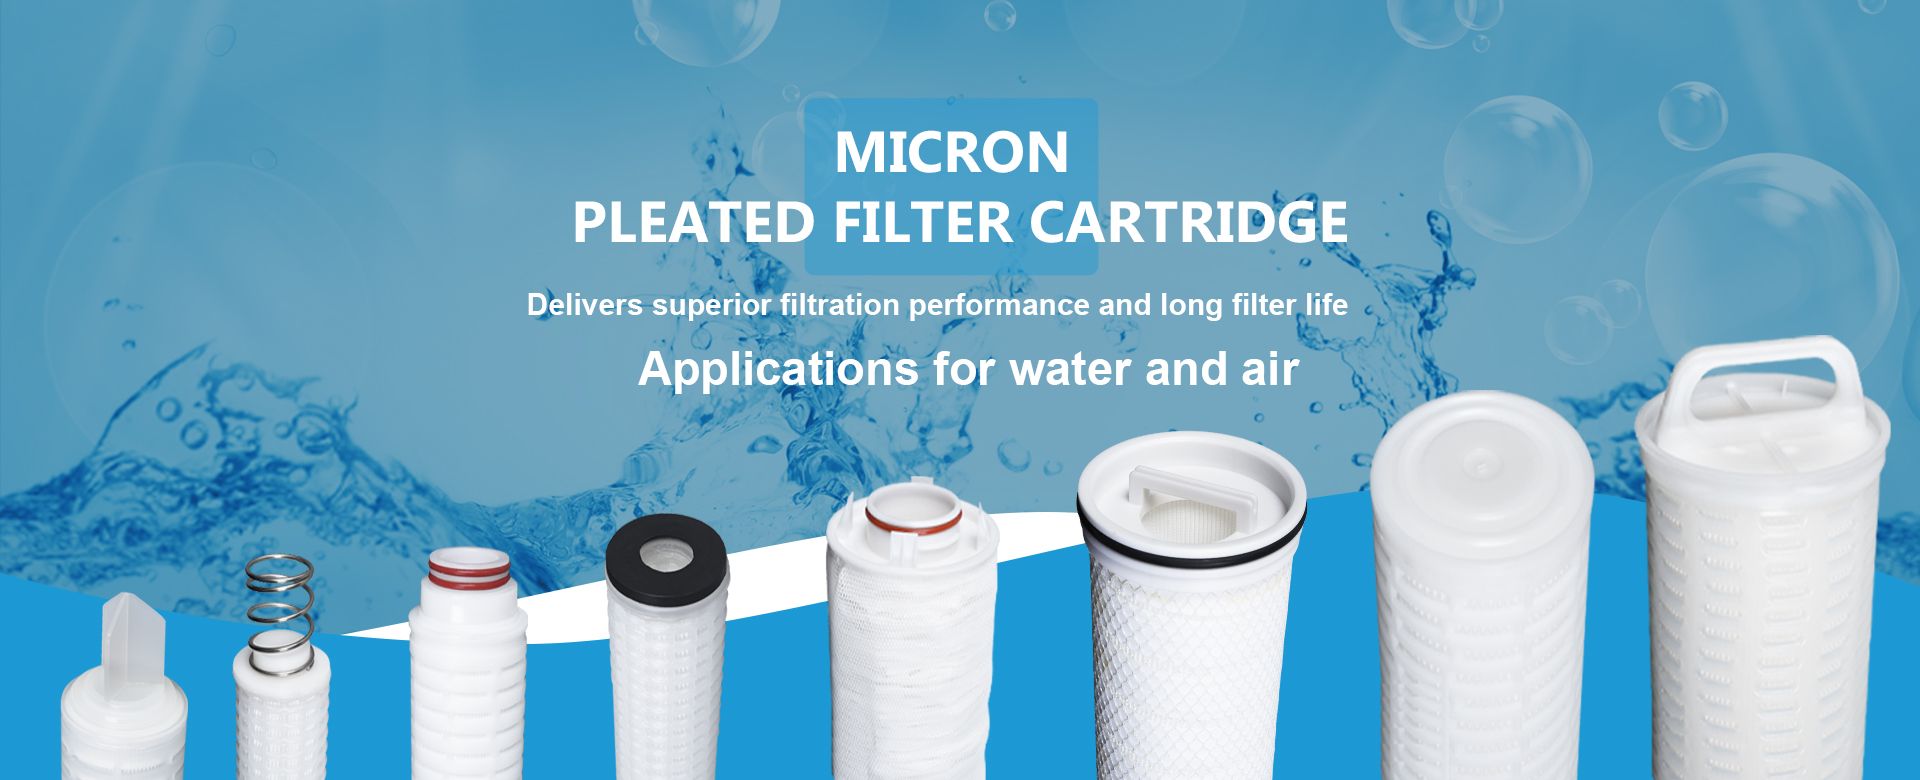 Micron Pleated Filter Cartridge